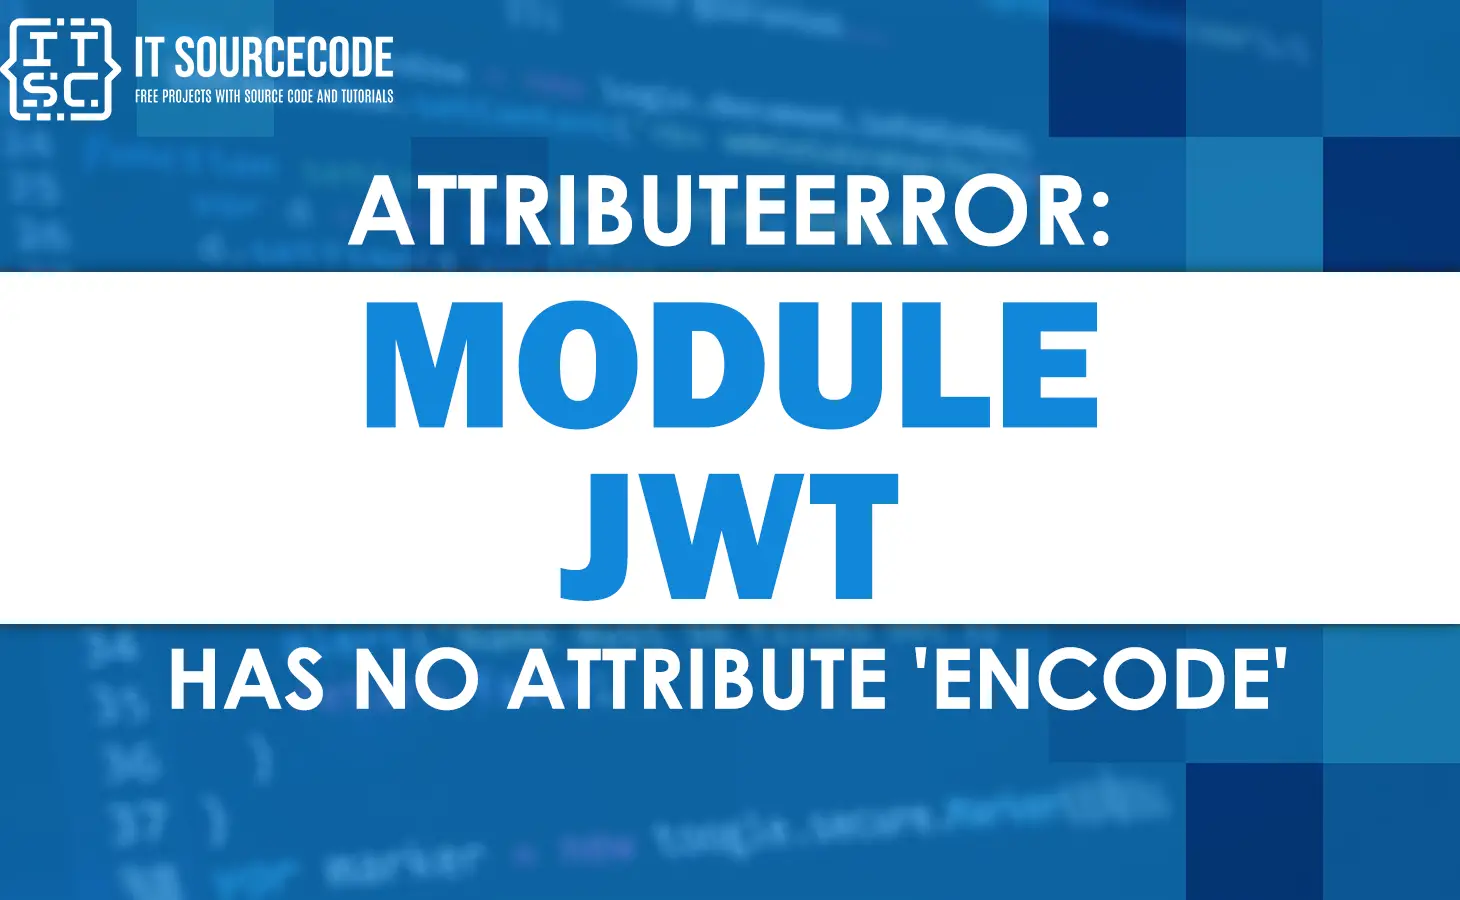 Attributeerror: module 'jwt' has no attribute 'encode'